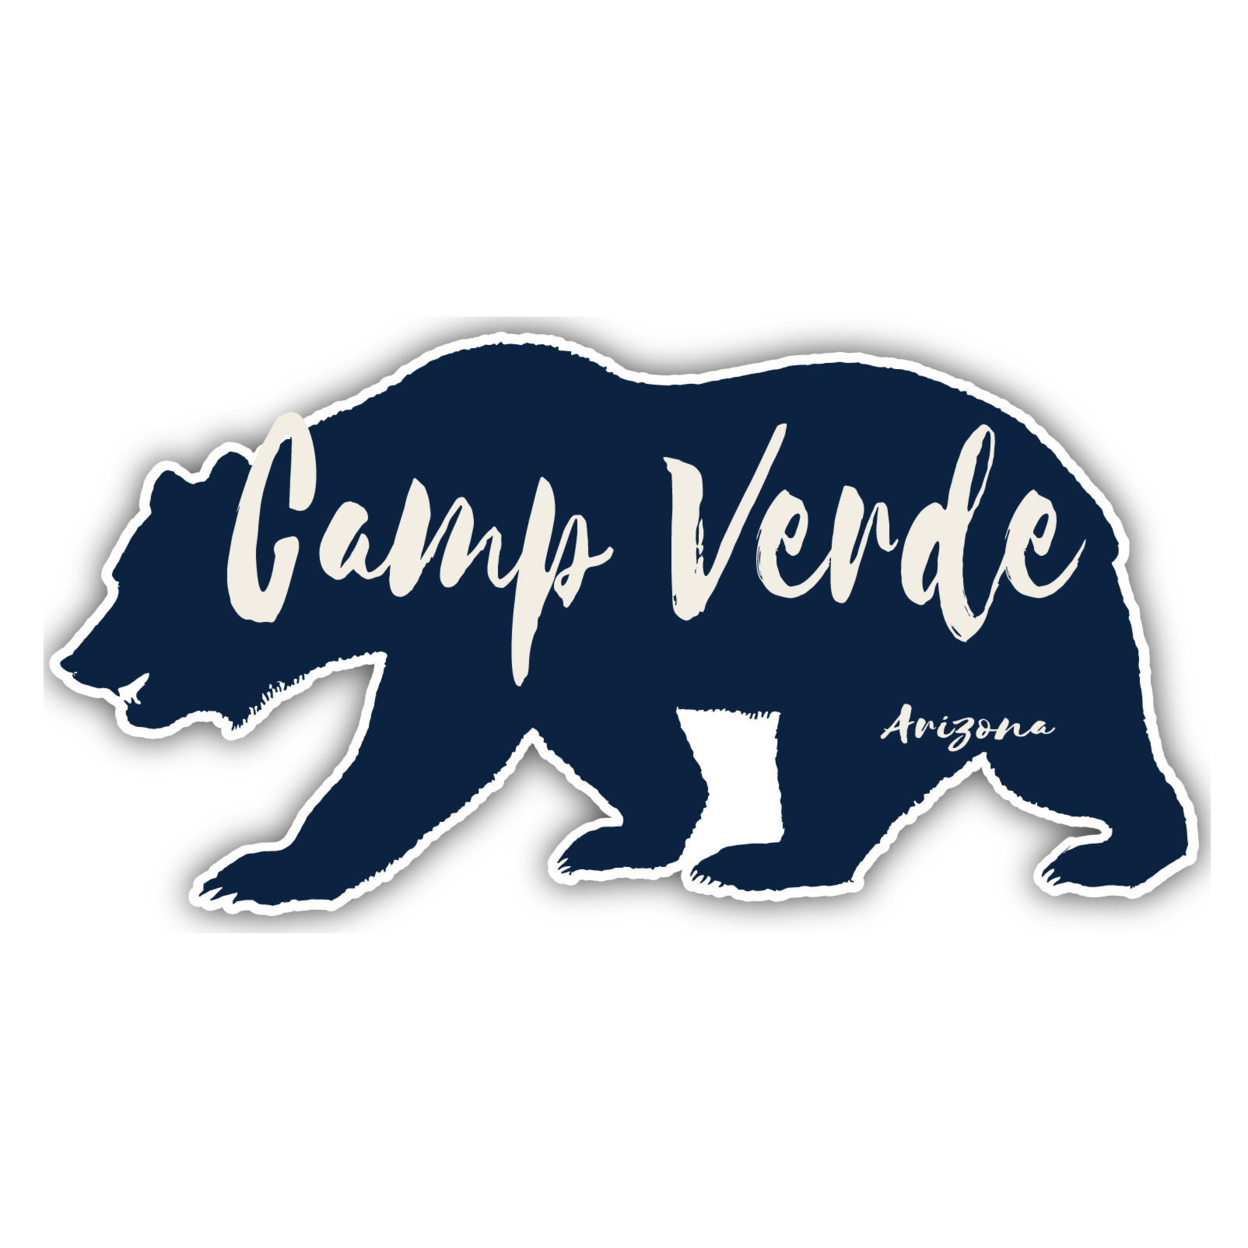 Camp Verde Arizona Souvenir Decorative Stickers (Choose Theme And Size) - 4-Pack, 8-Inch, Bear